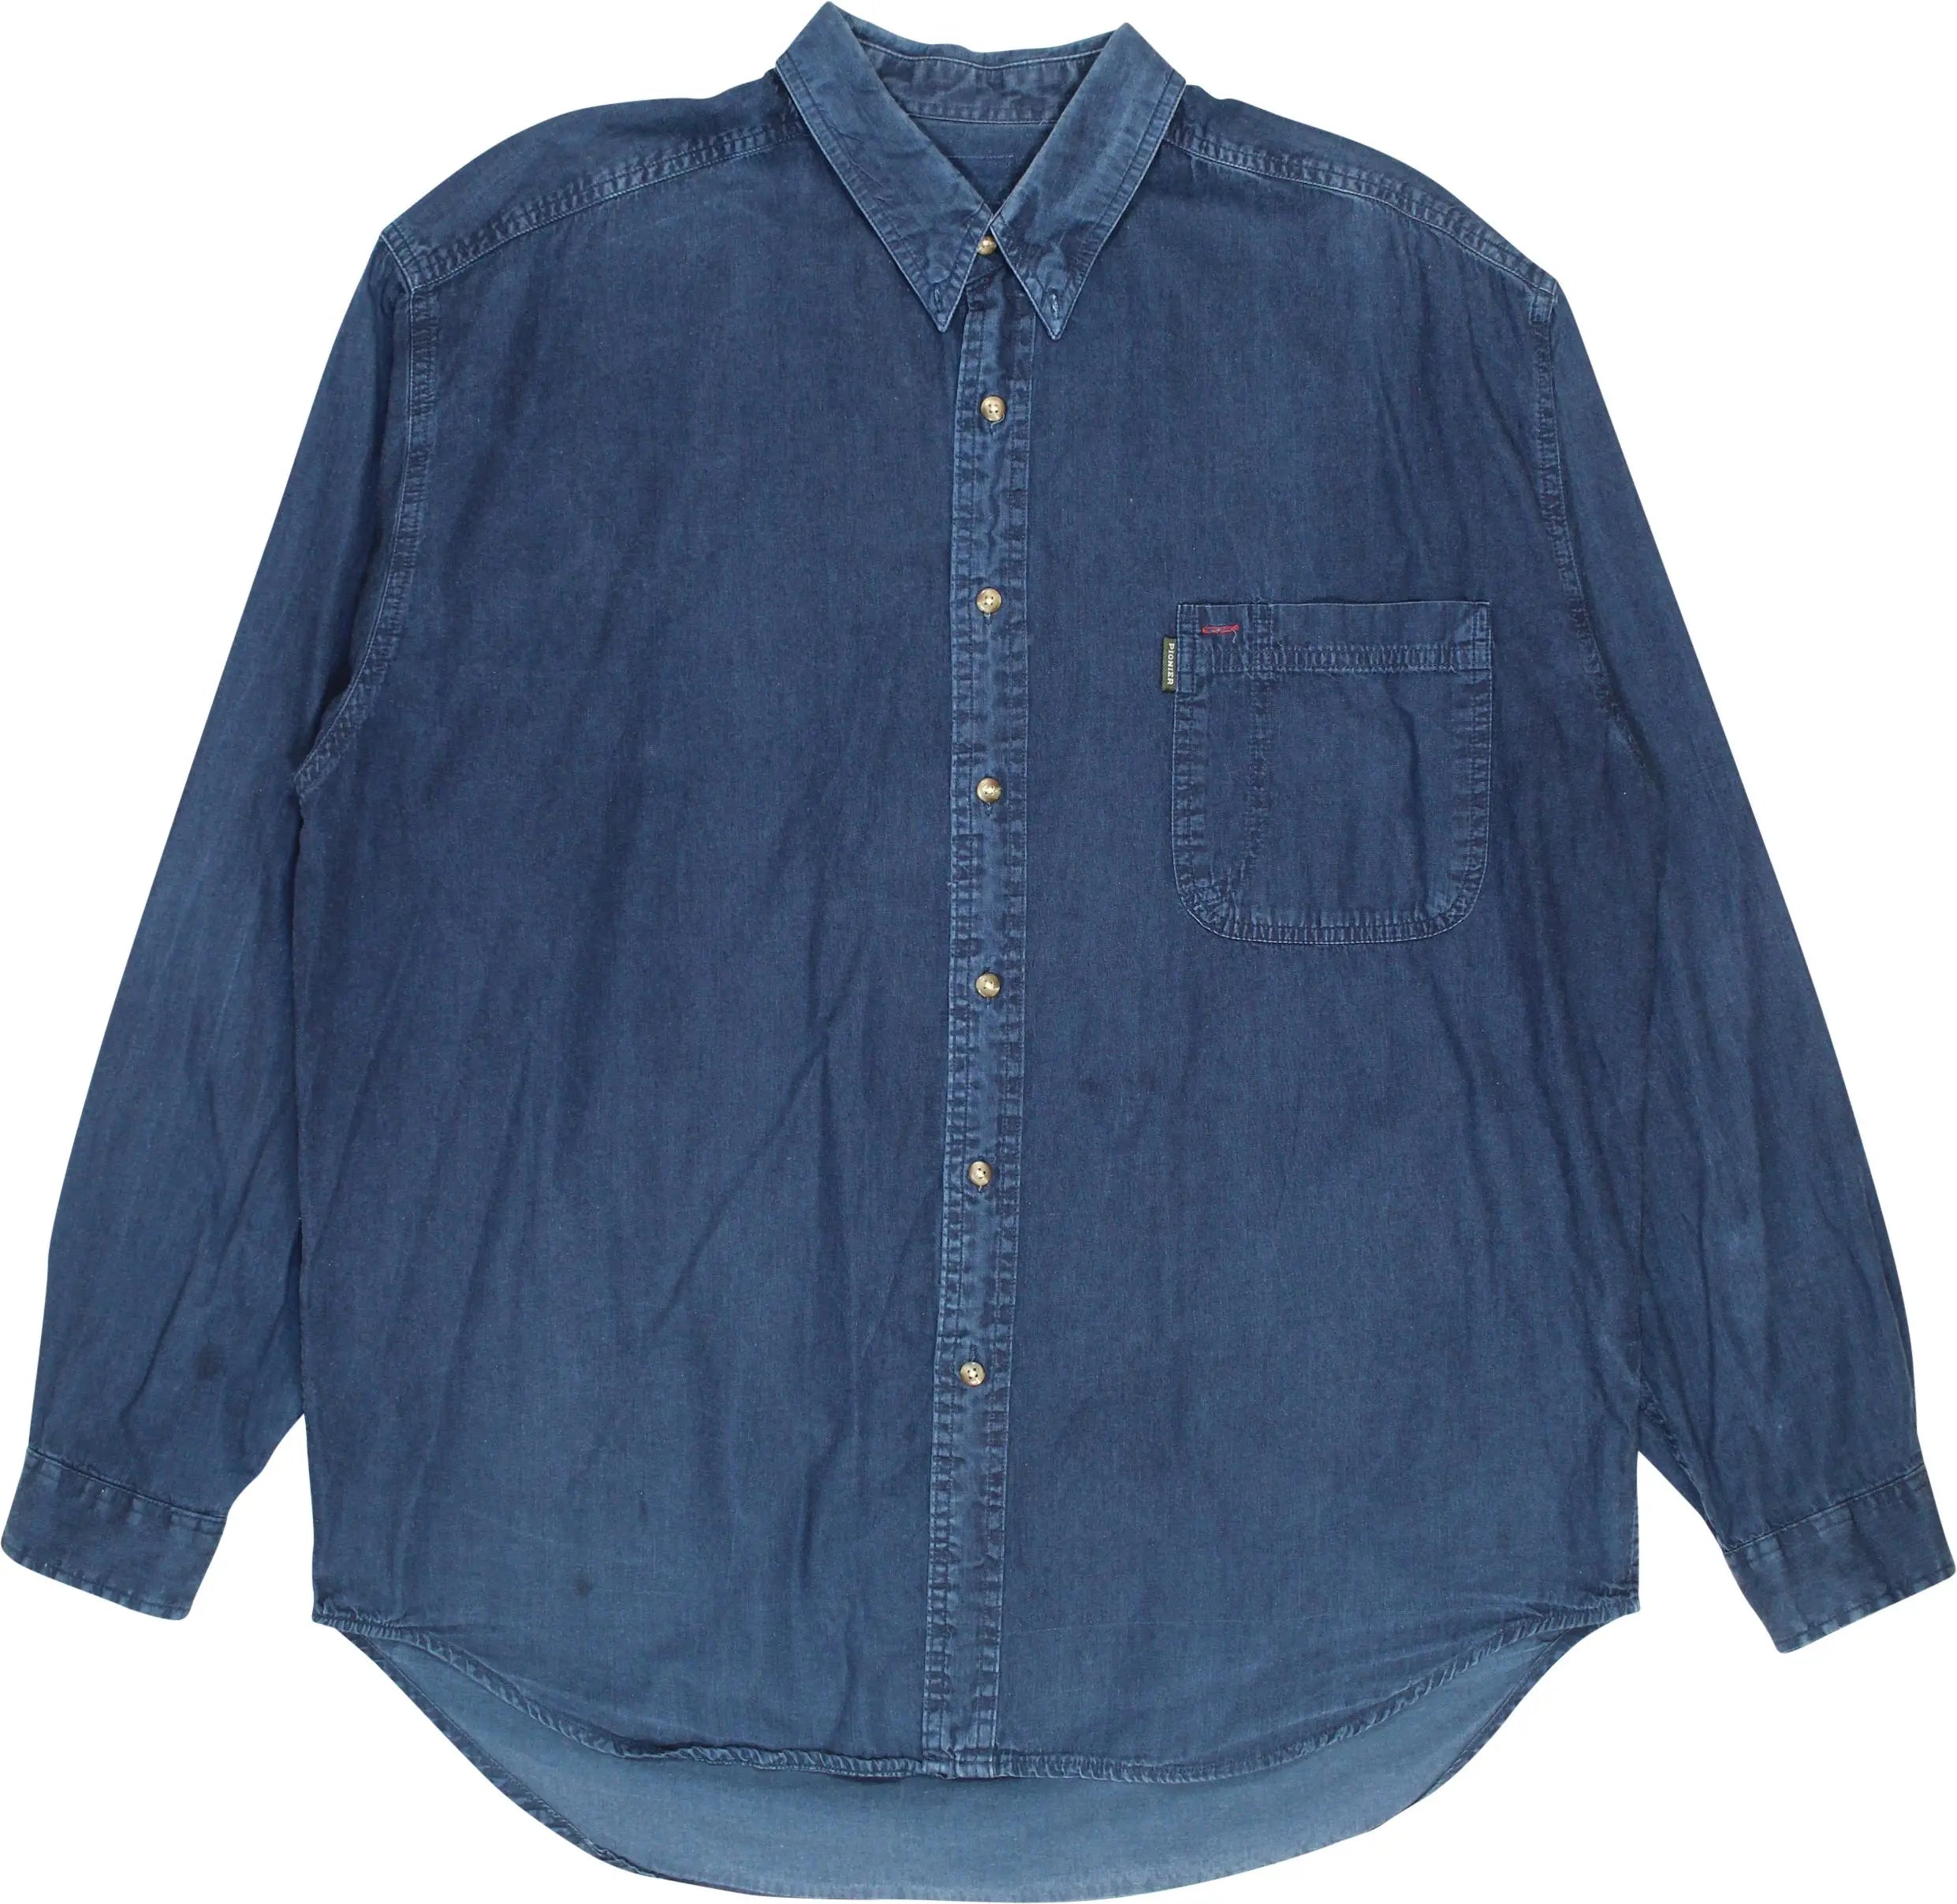 Pionier - Denim Shirt- ThriftTale.com - Vintage and second handclothing